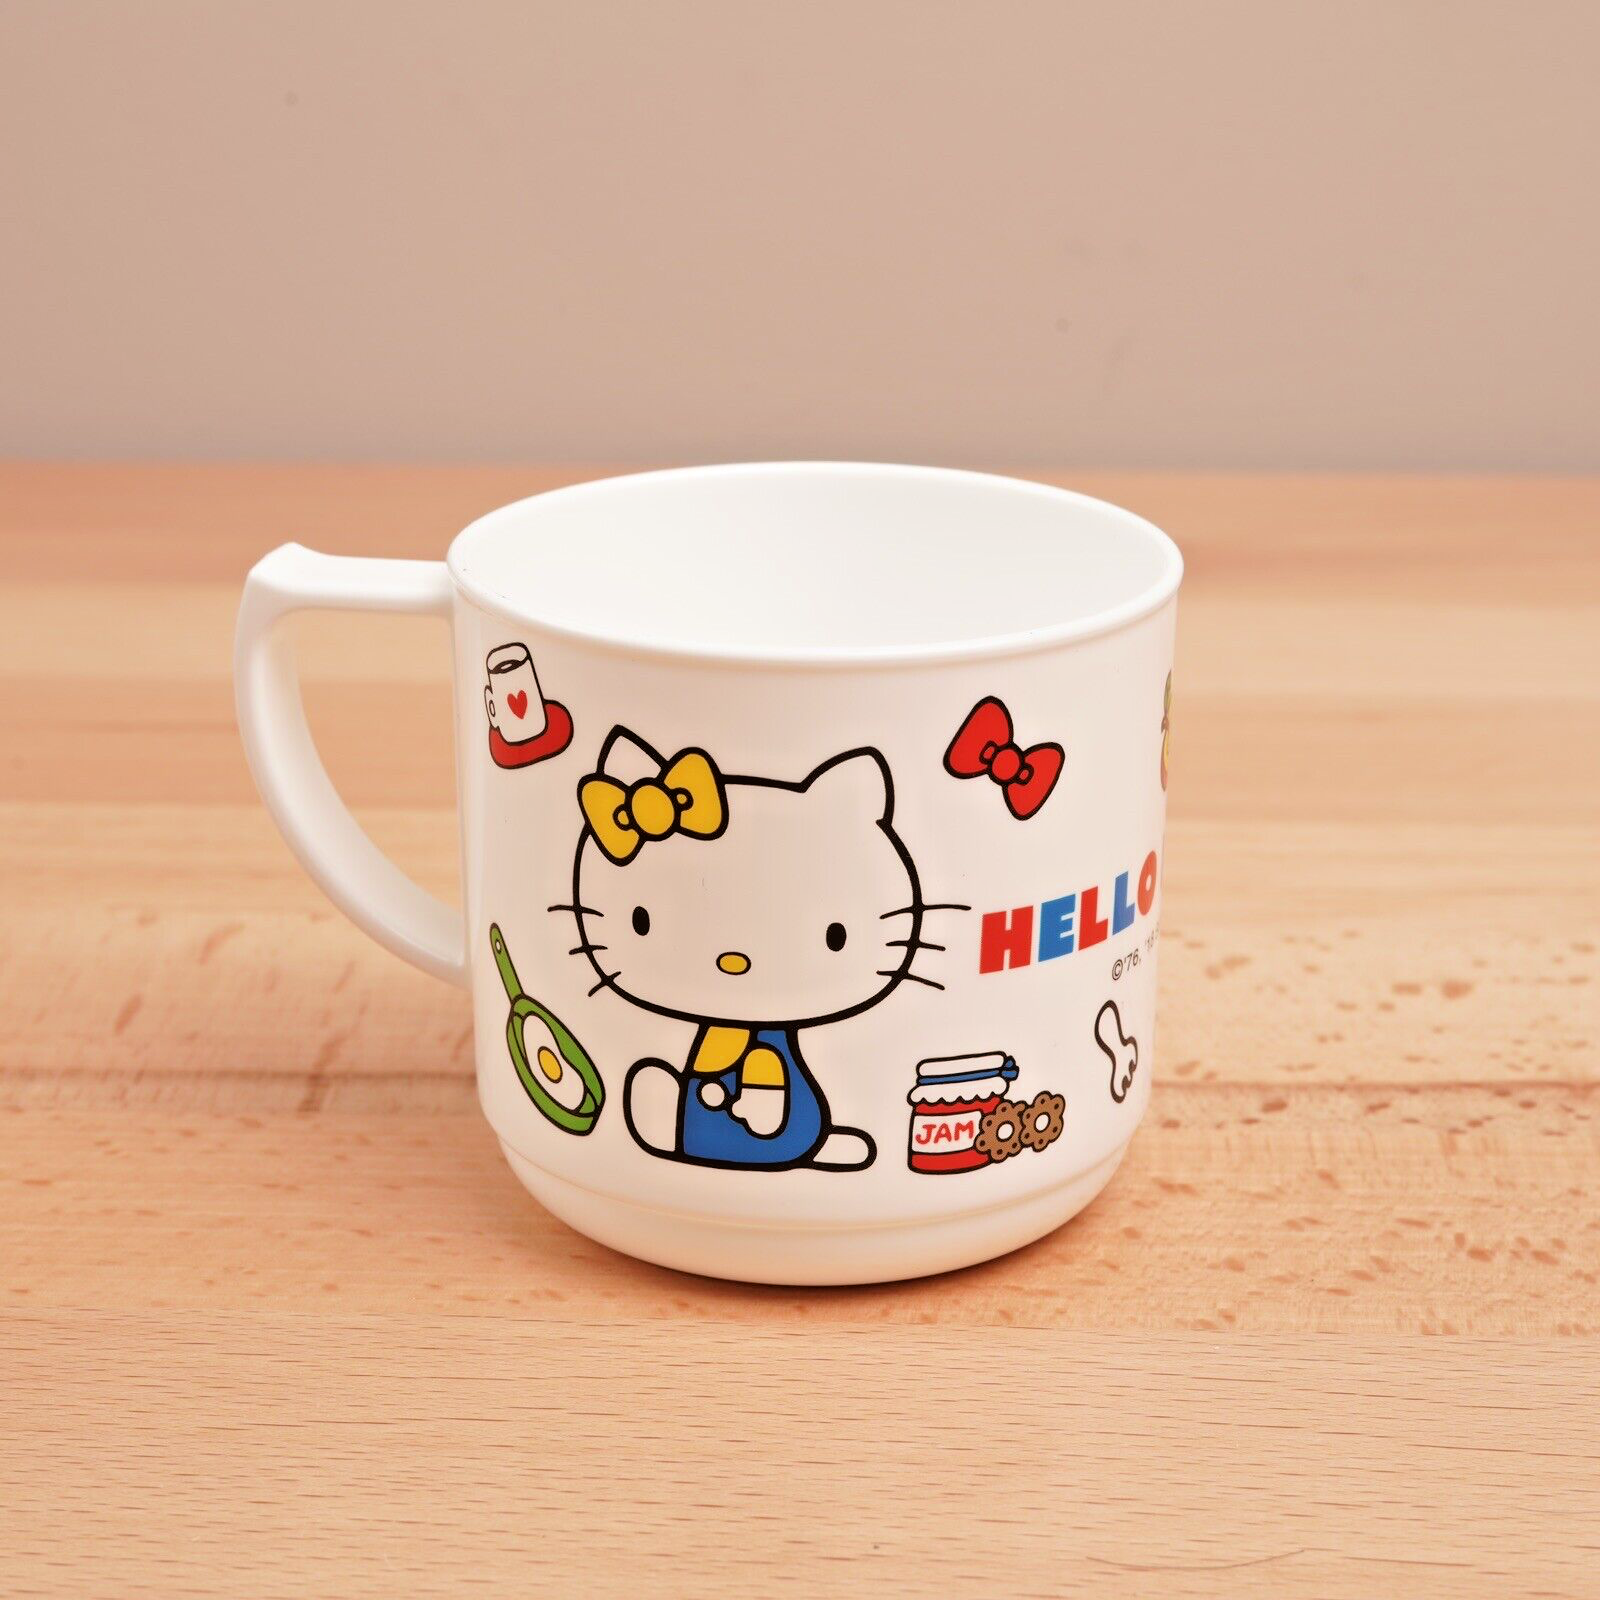 Sanrio Hello Kitty Cup 3” With Handle  Hello Kitty Plastic Mug Daiso 8OZ NEW - $7.64